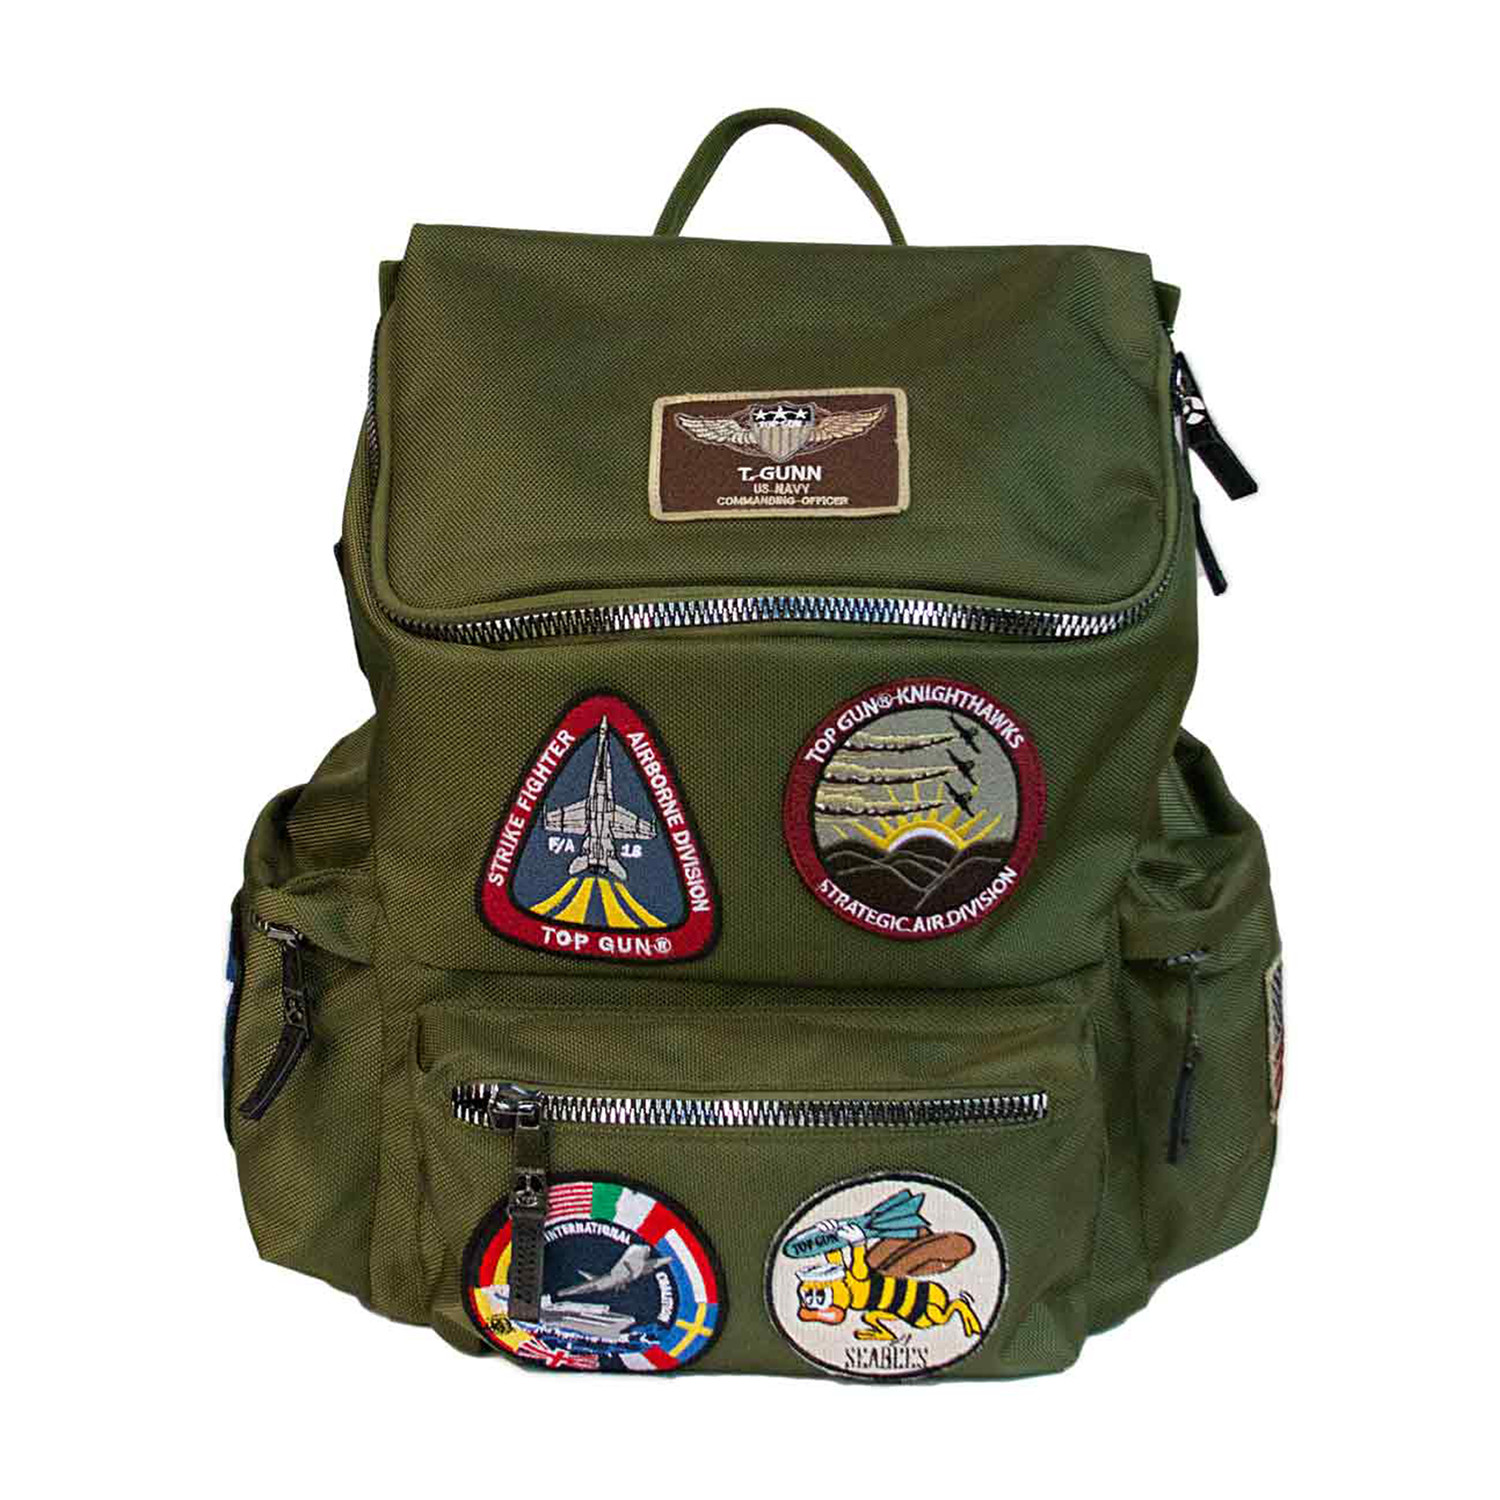 Top Gun Maverick Backpack